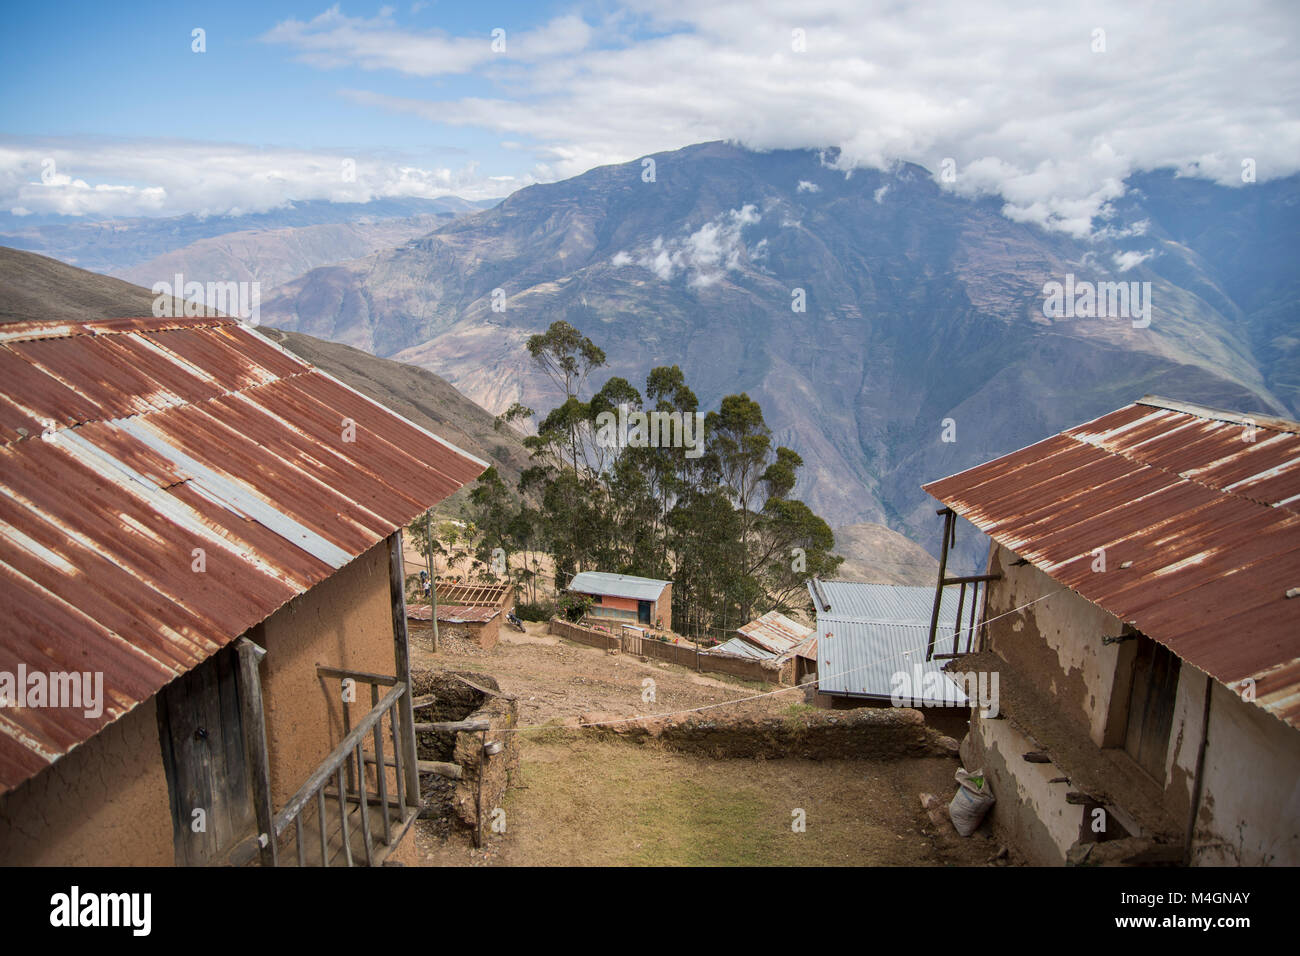 Mountain village in Tacacoma region (Bolivia Stock Photo - Alamy